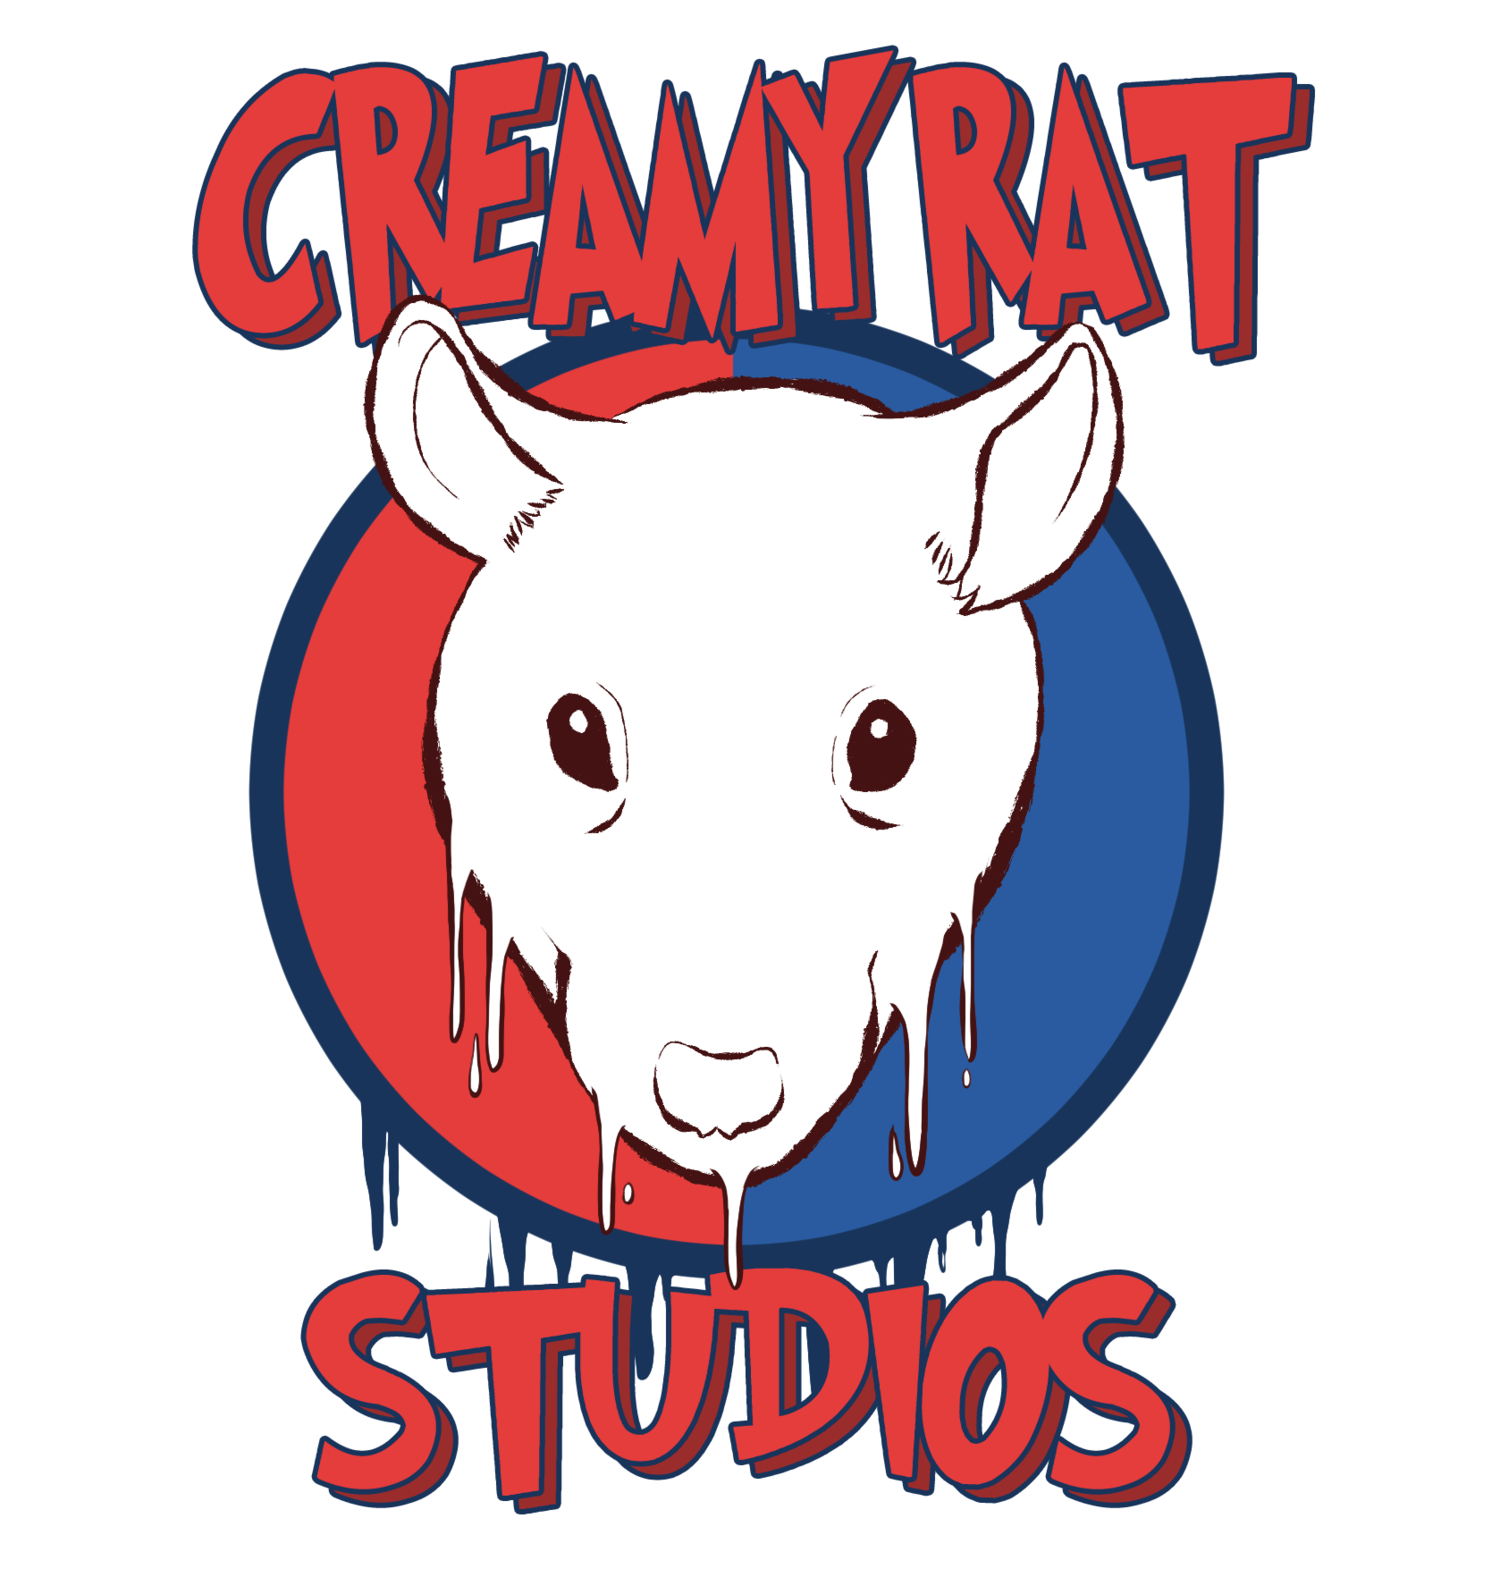 Creamy Rat Studios